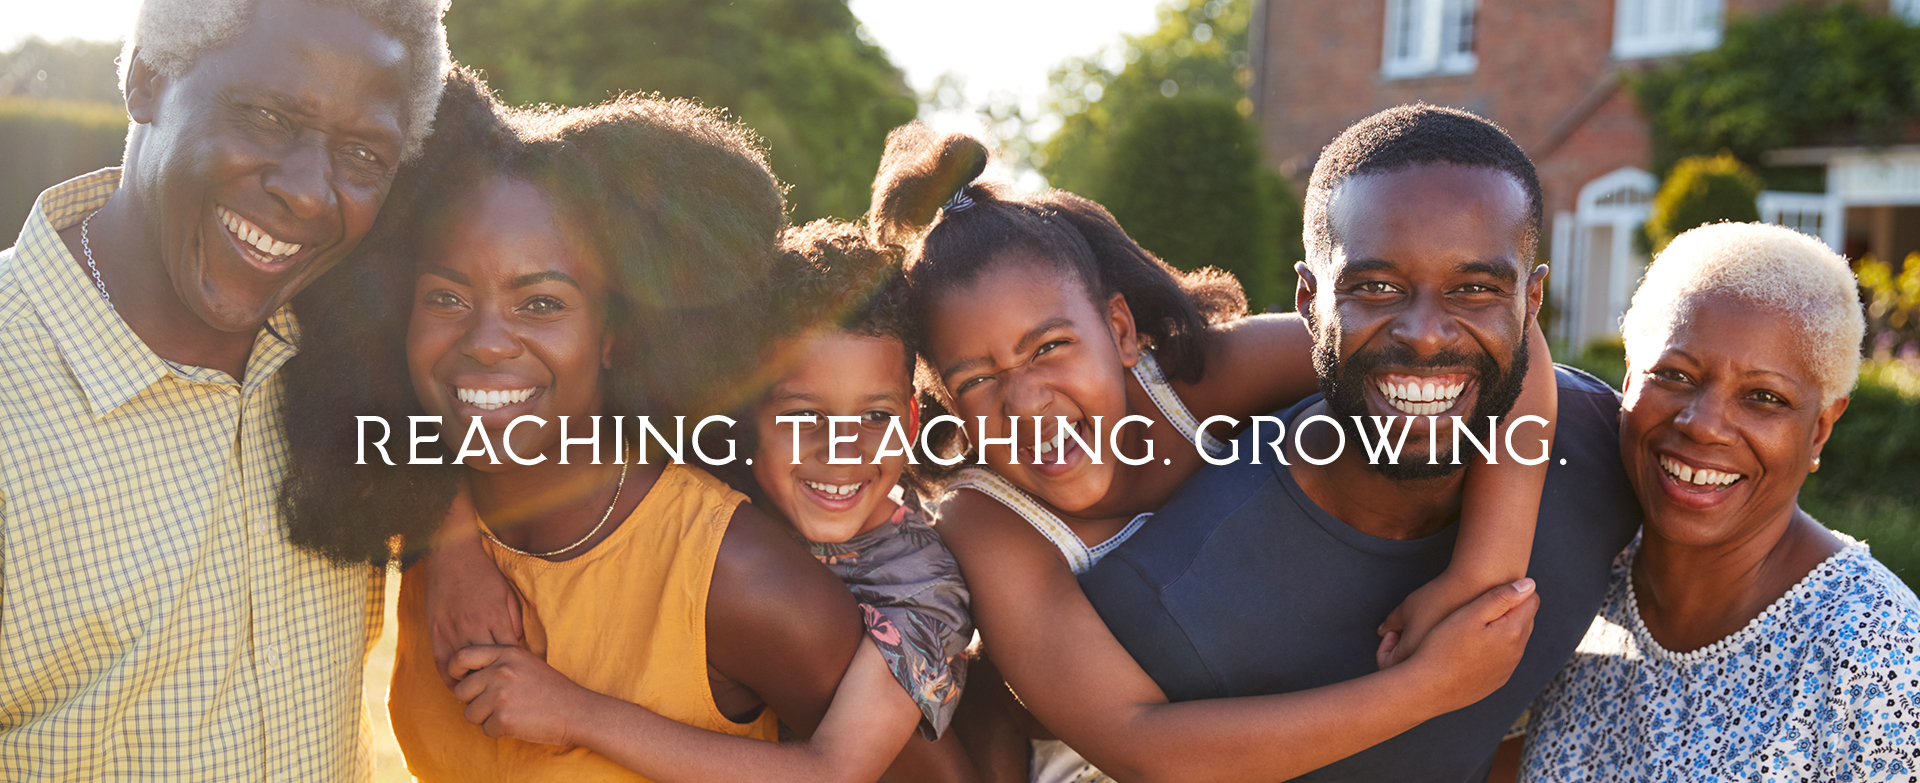 Reaching. Teaching. Growing.